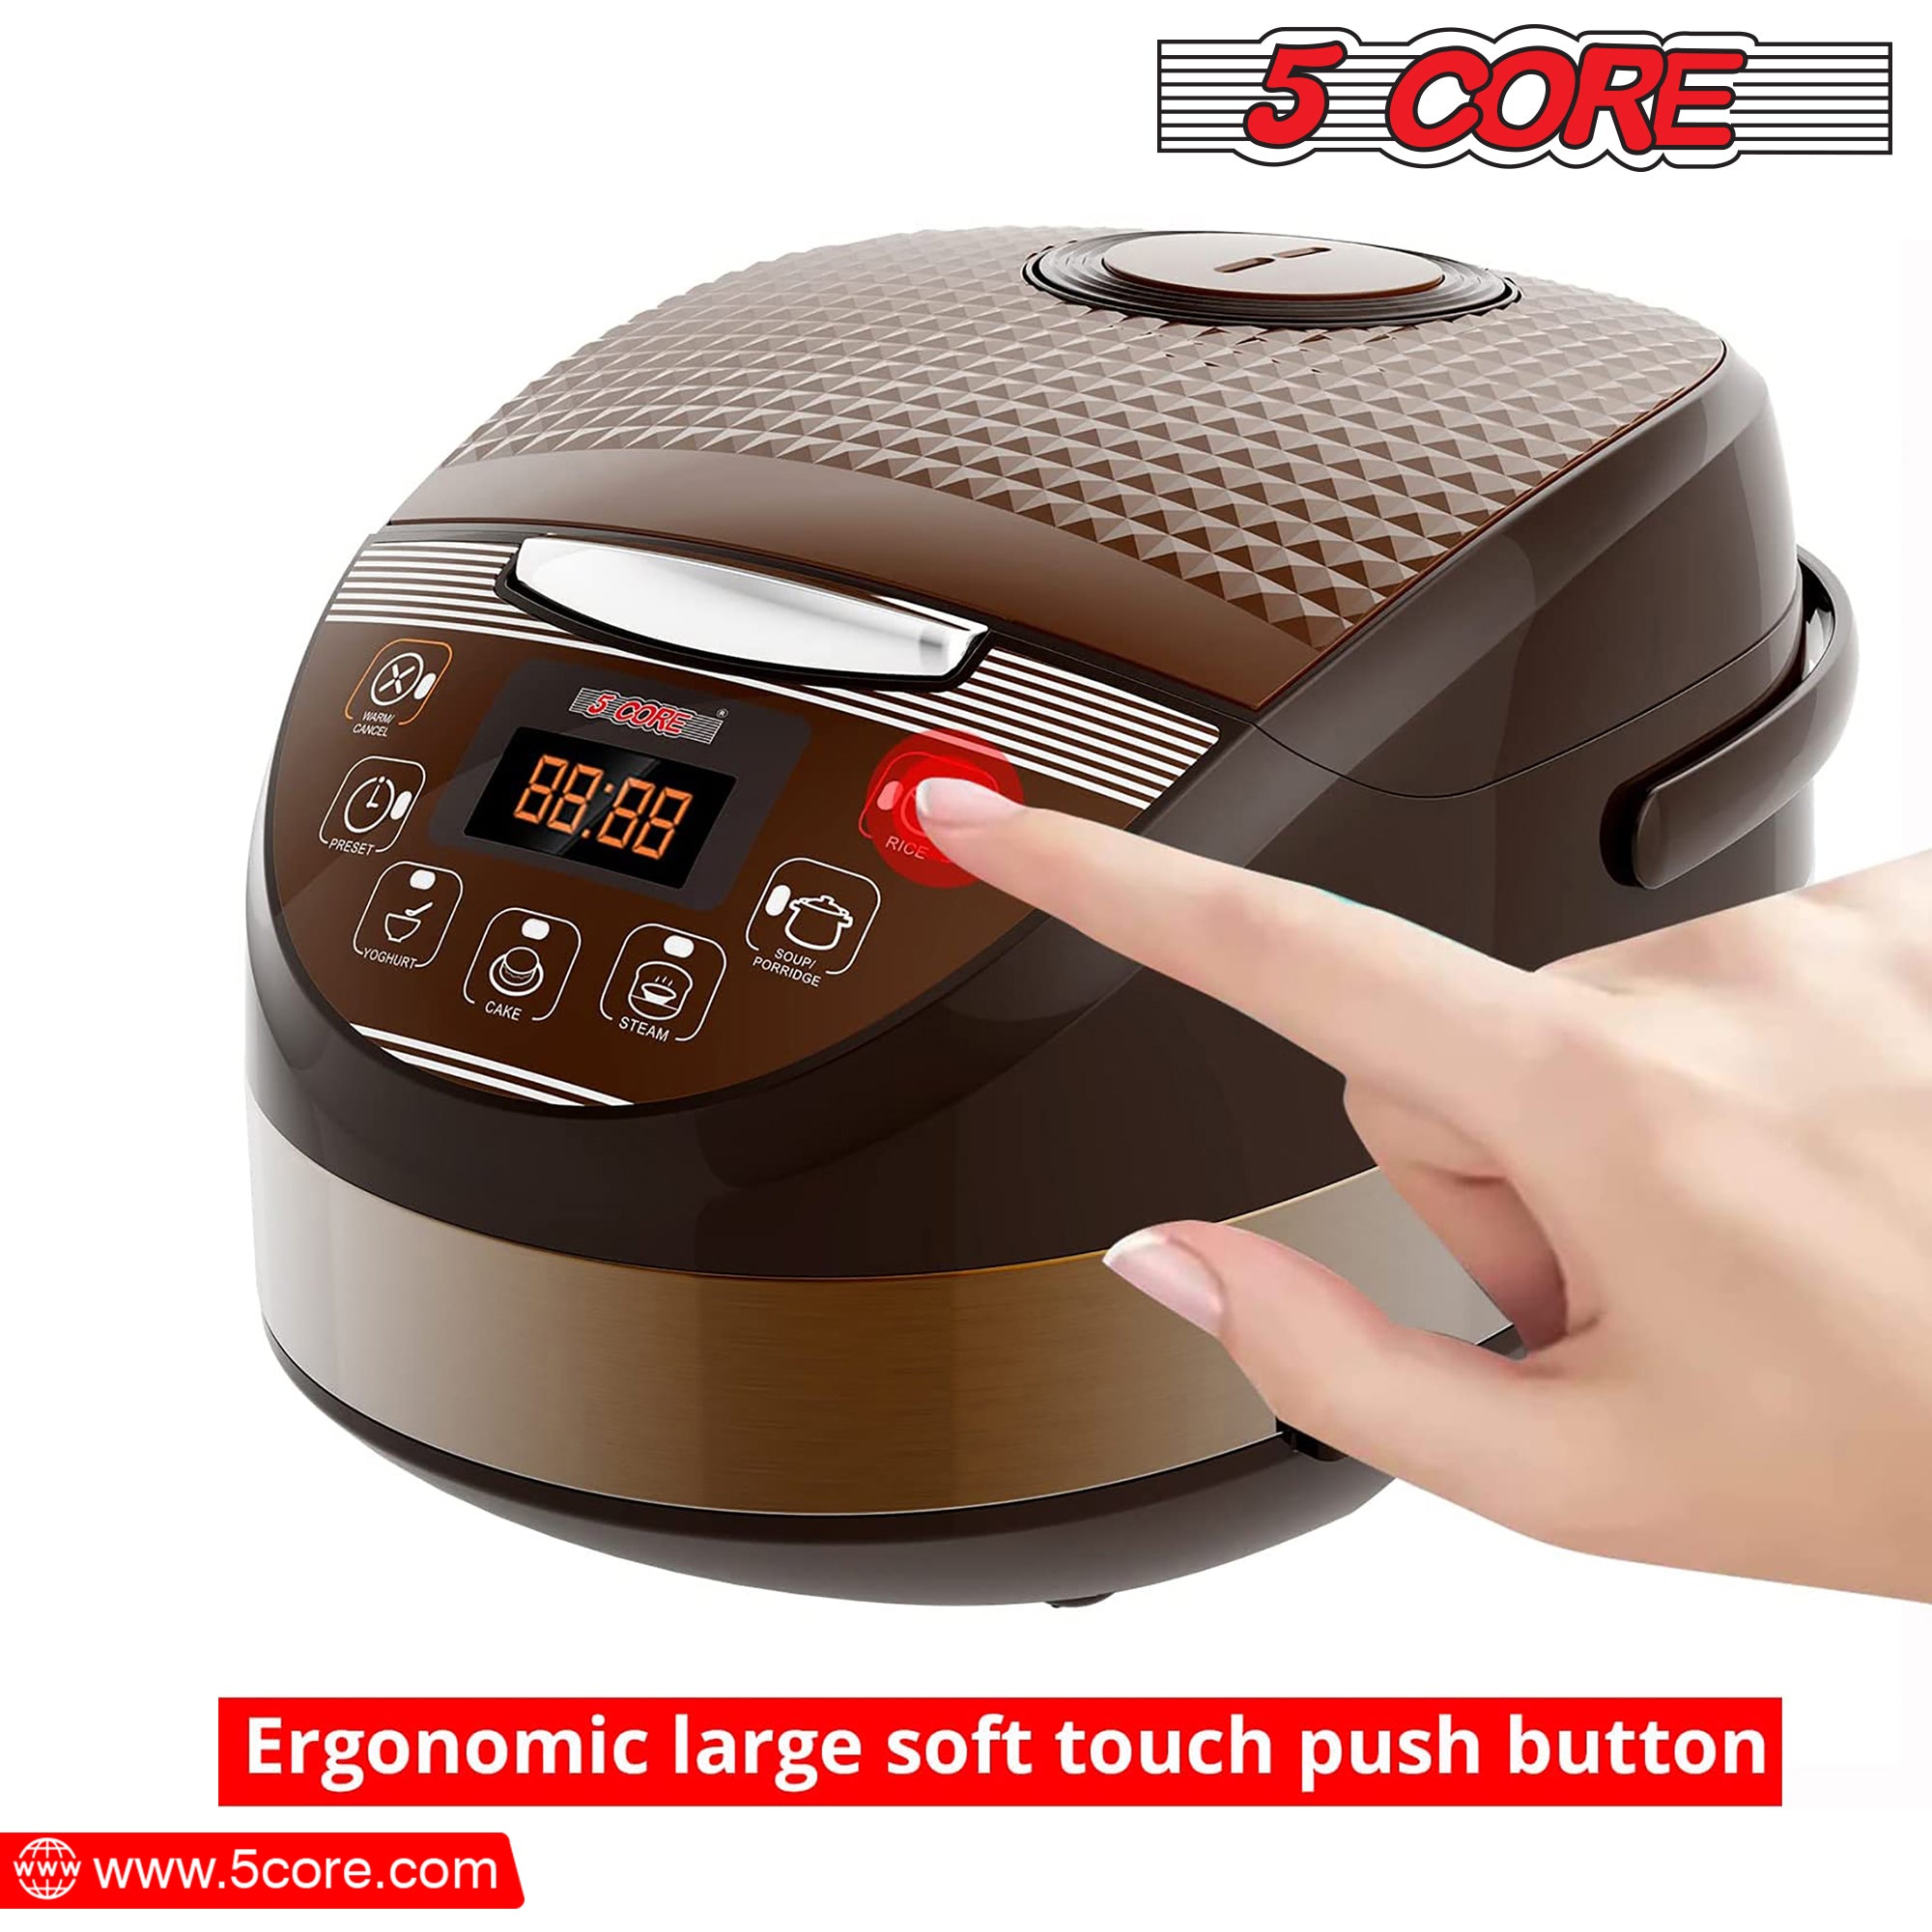 Ergonomic large soft touch push button